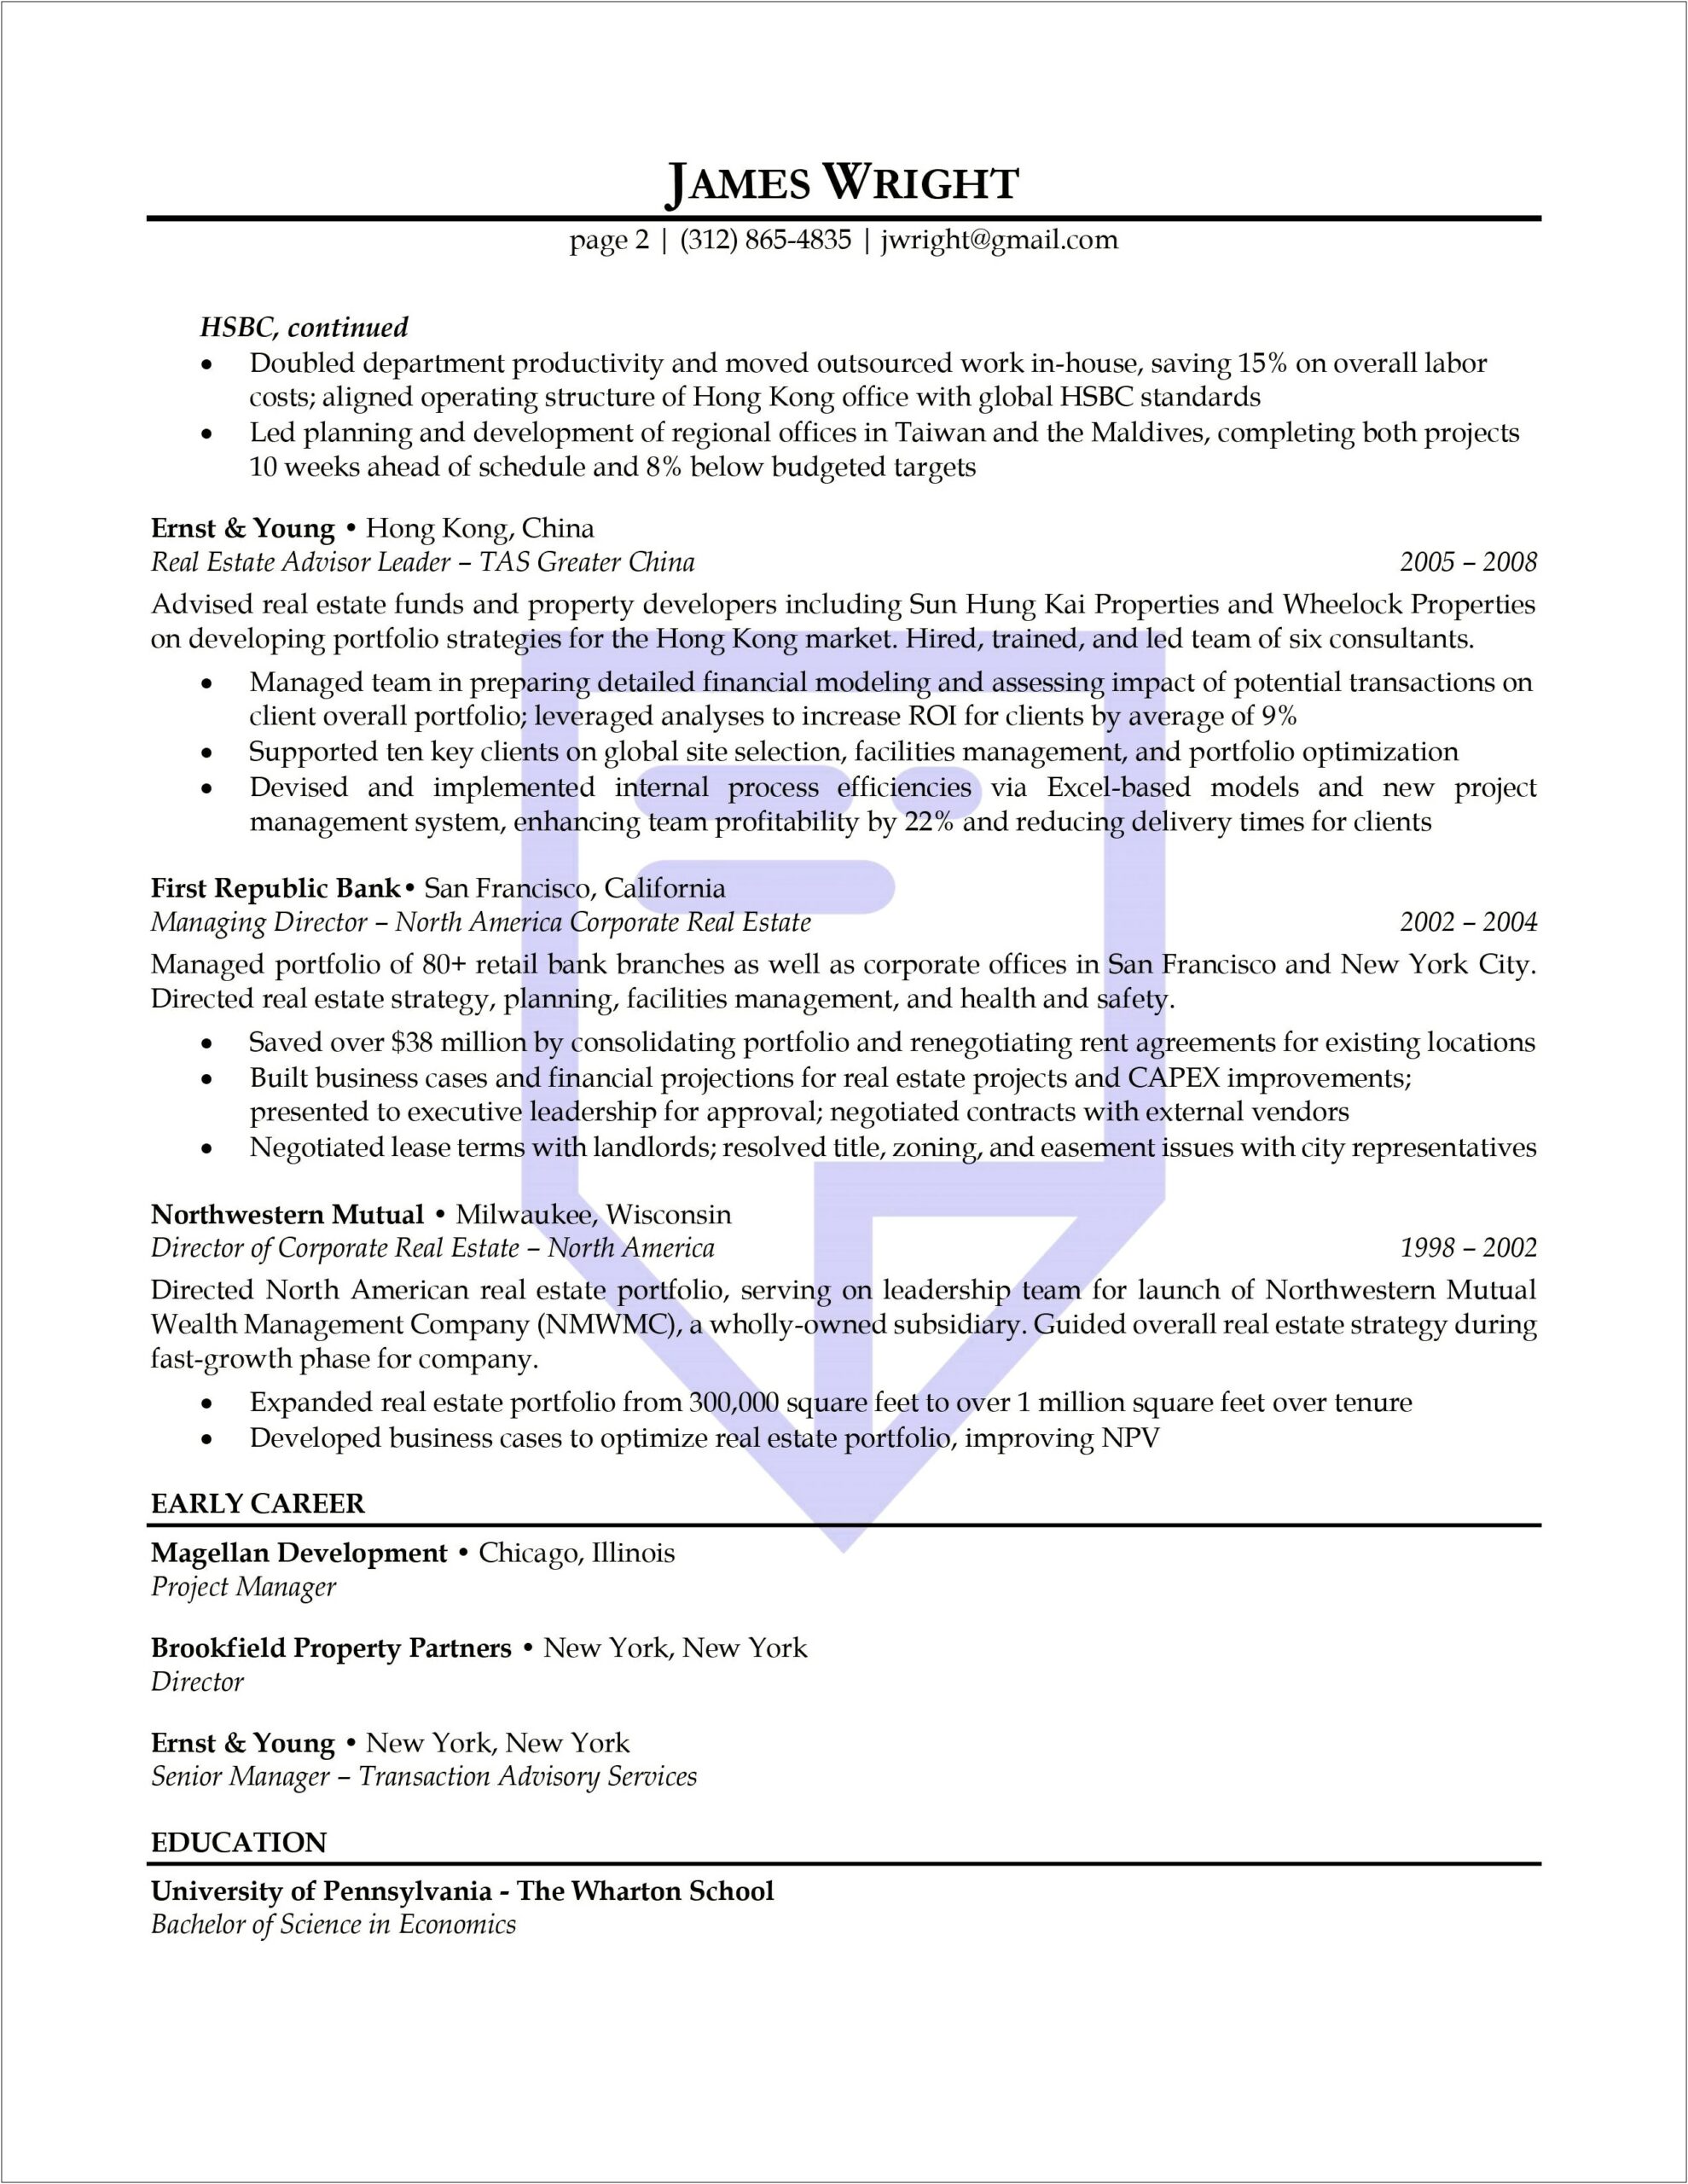 Sample Resume For Portfolio Manager Healthcare